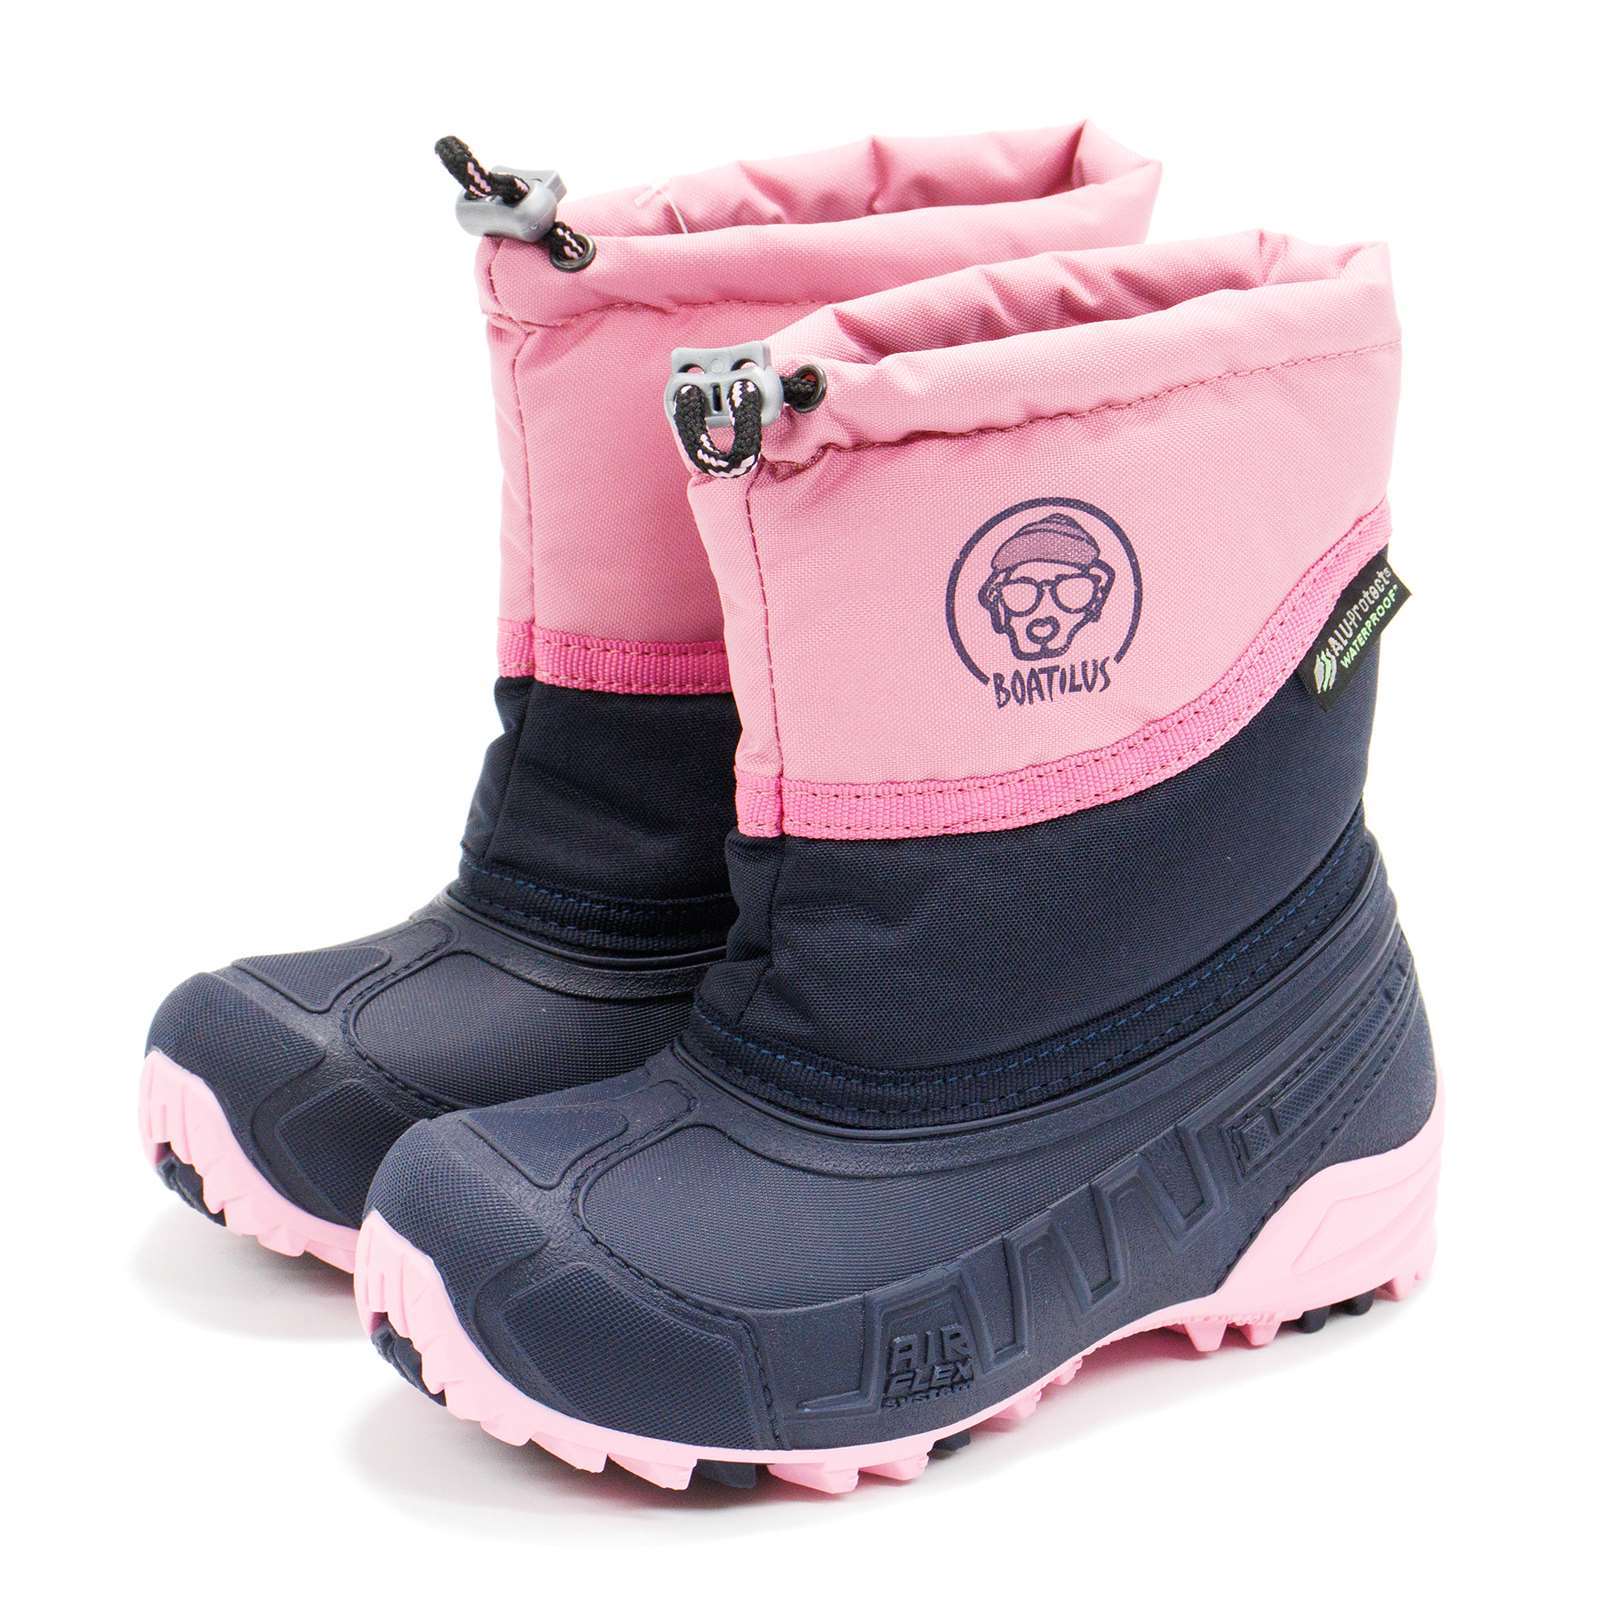 Boatilus Girl Hybrid03 Waterproof Boots